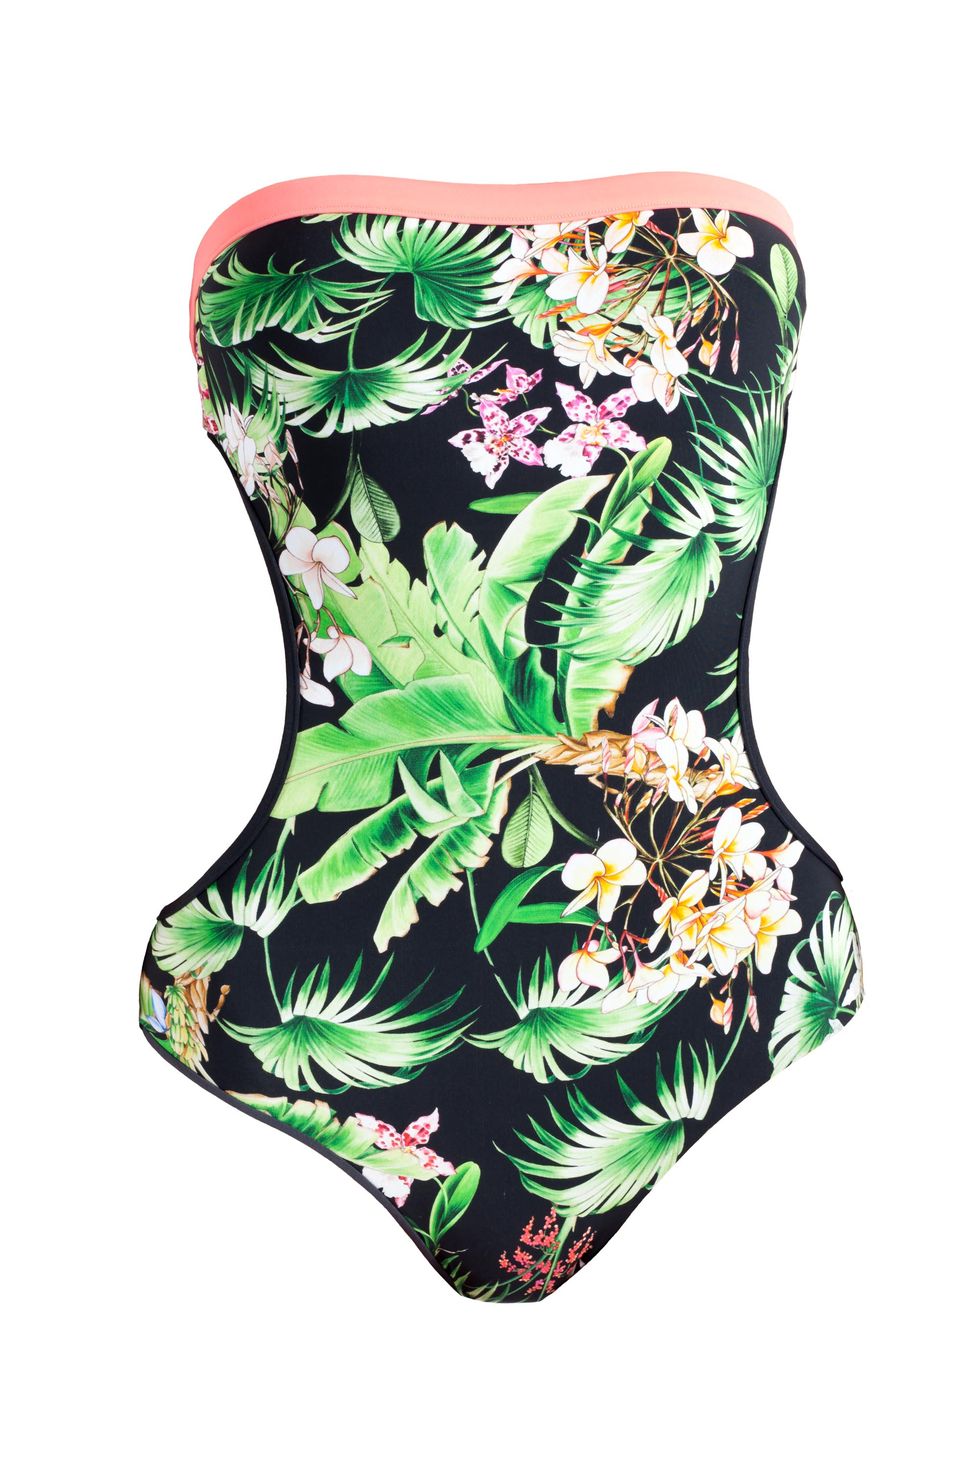 Beachwear 2017 tra i trikini di tendenza quello a fascia di Mila Z